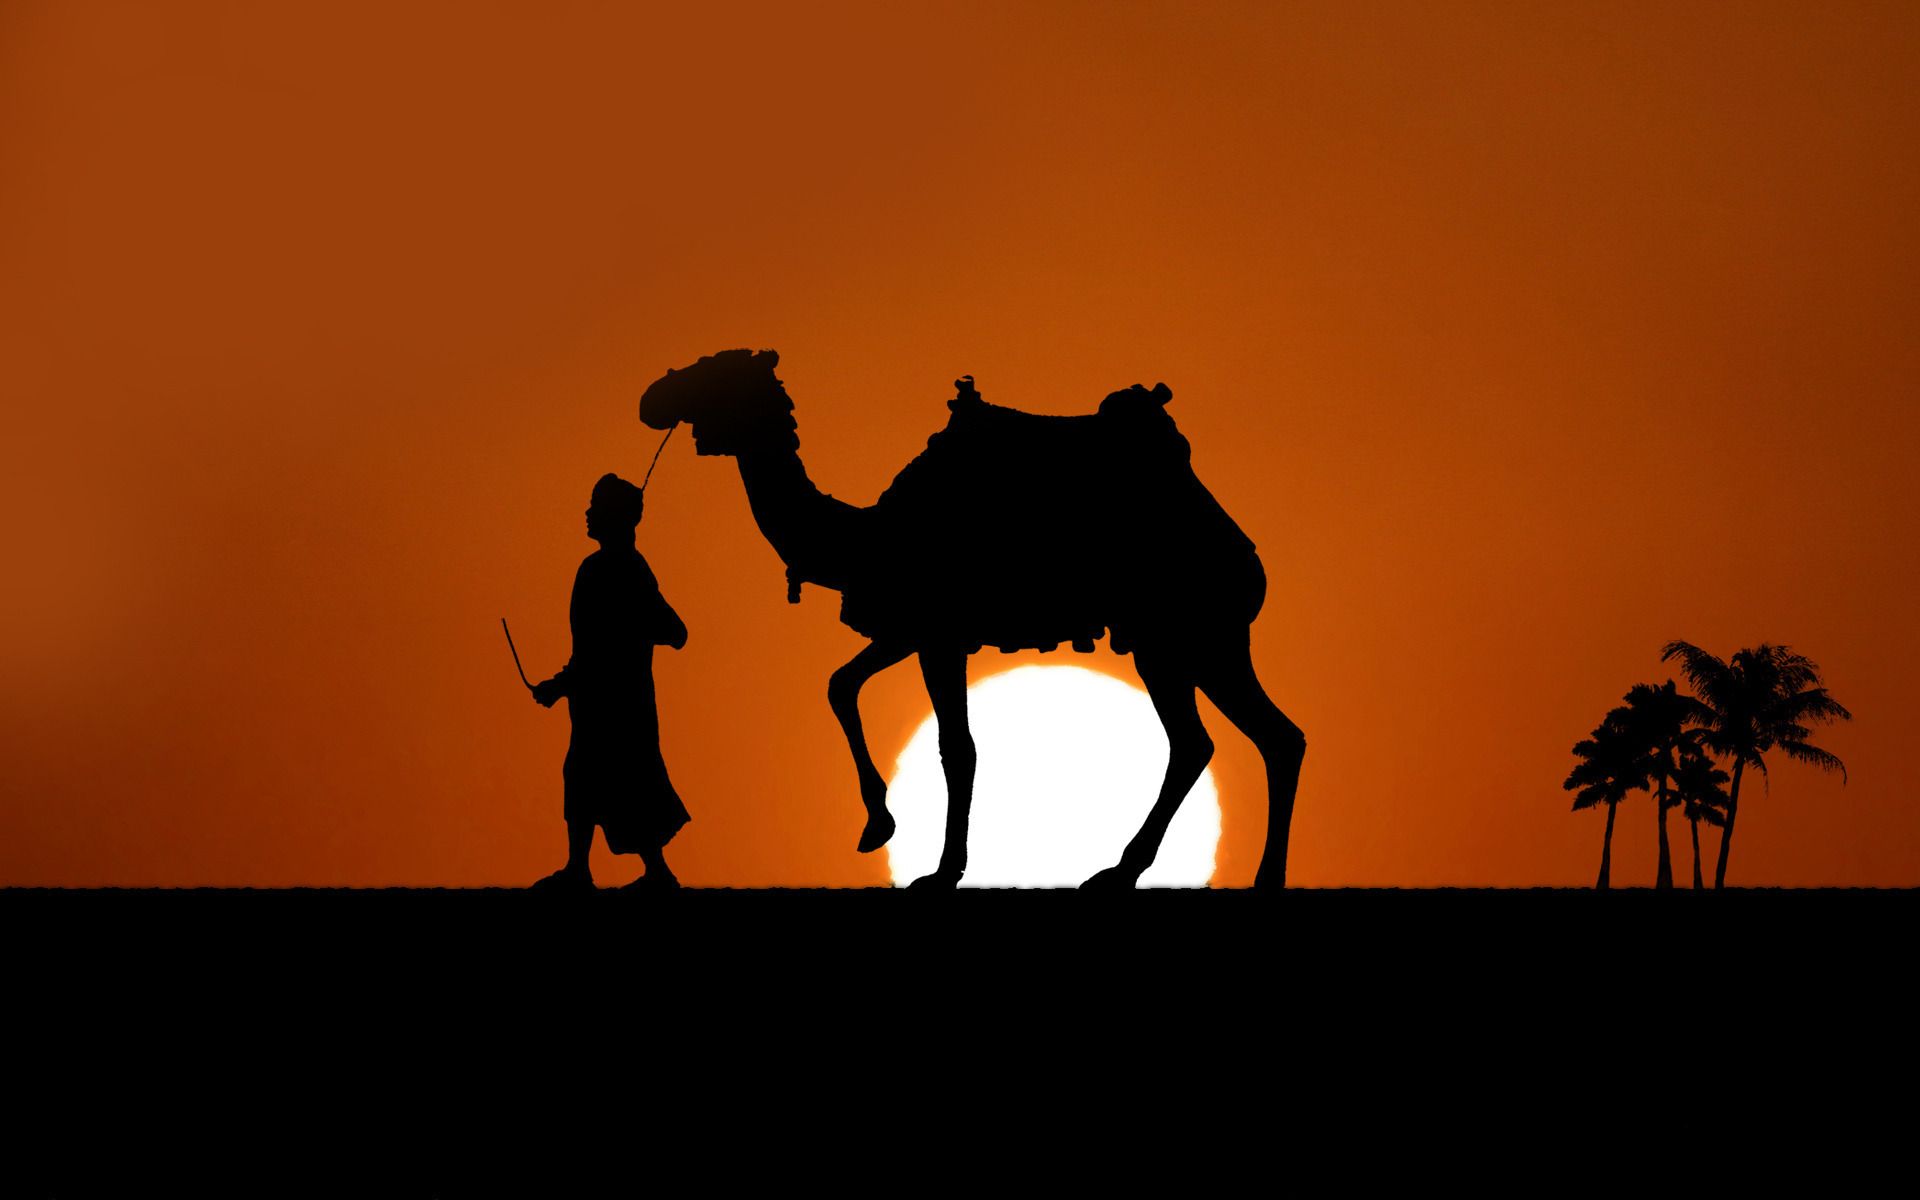 Minimalist Desert Night Camel Walking Wallpapers